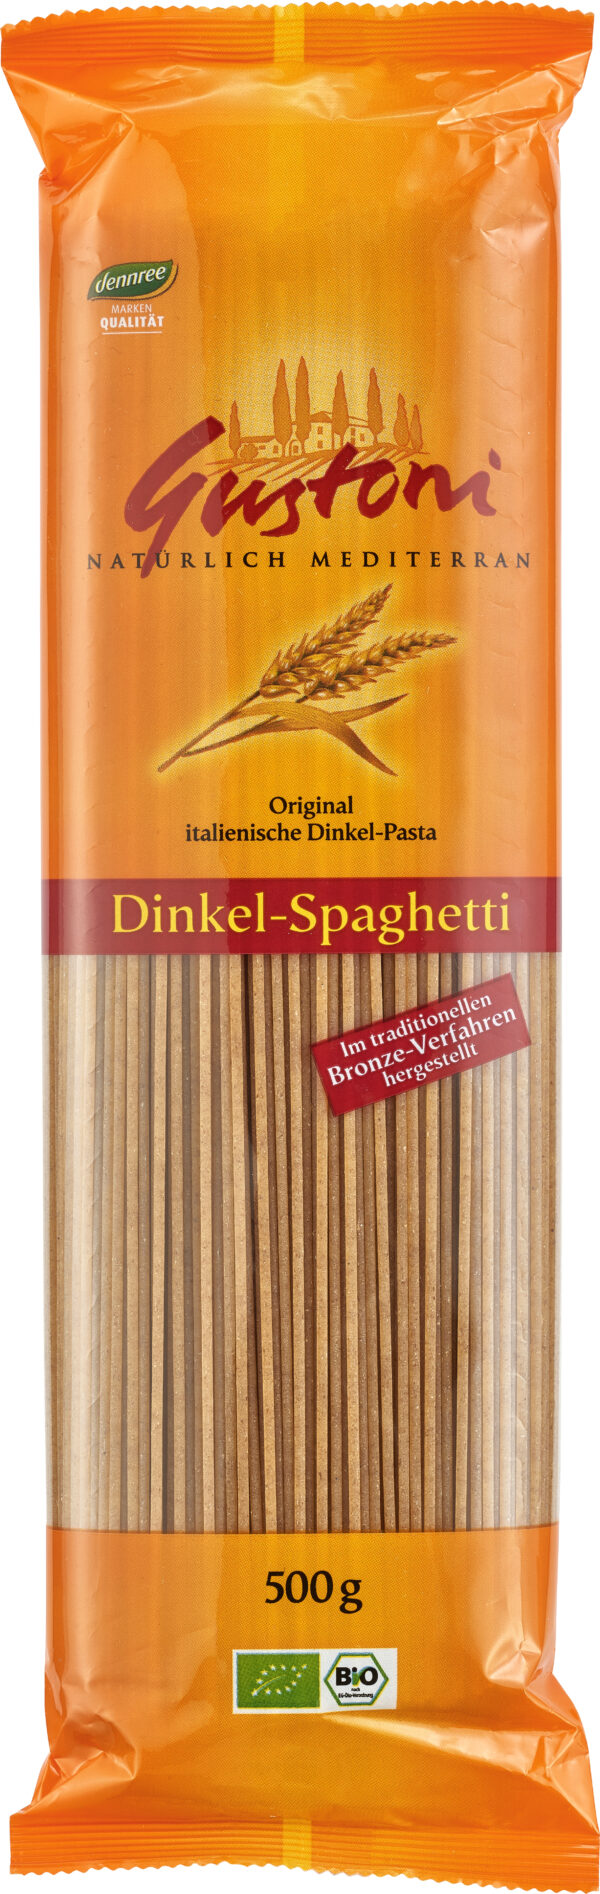 Gustoni Dinkel-Spaghetti, Original italienische Dinkel-Pasta 500g